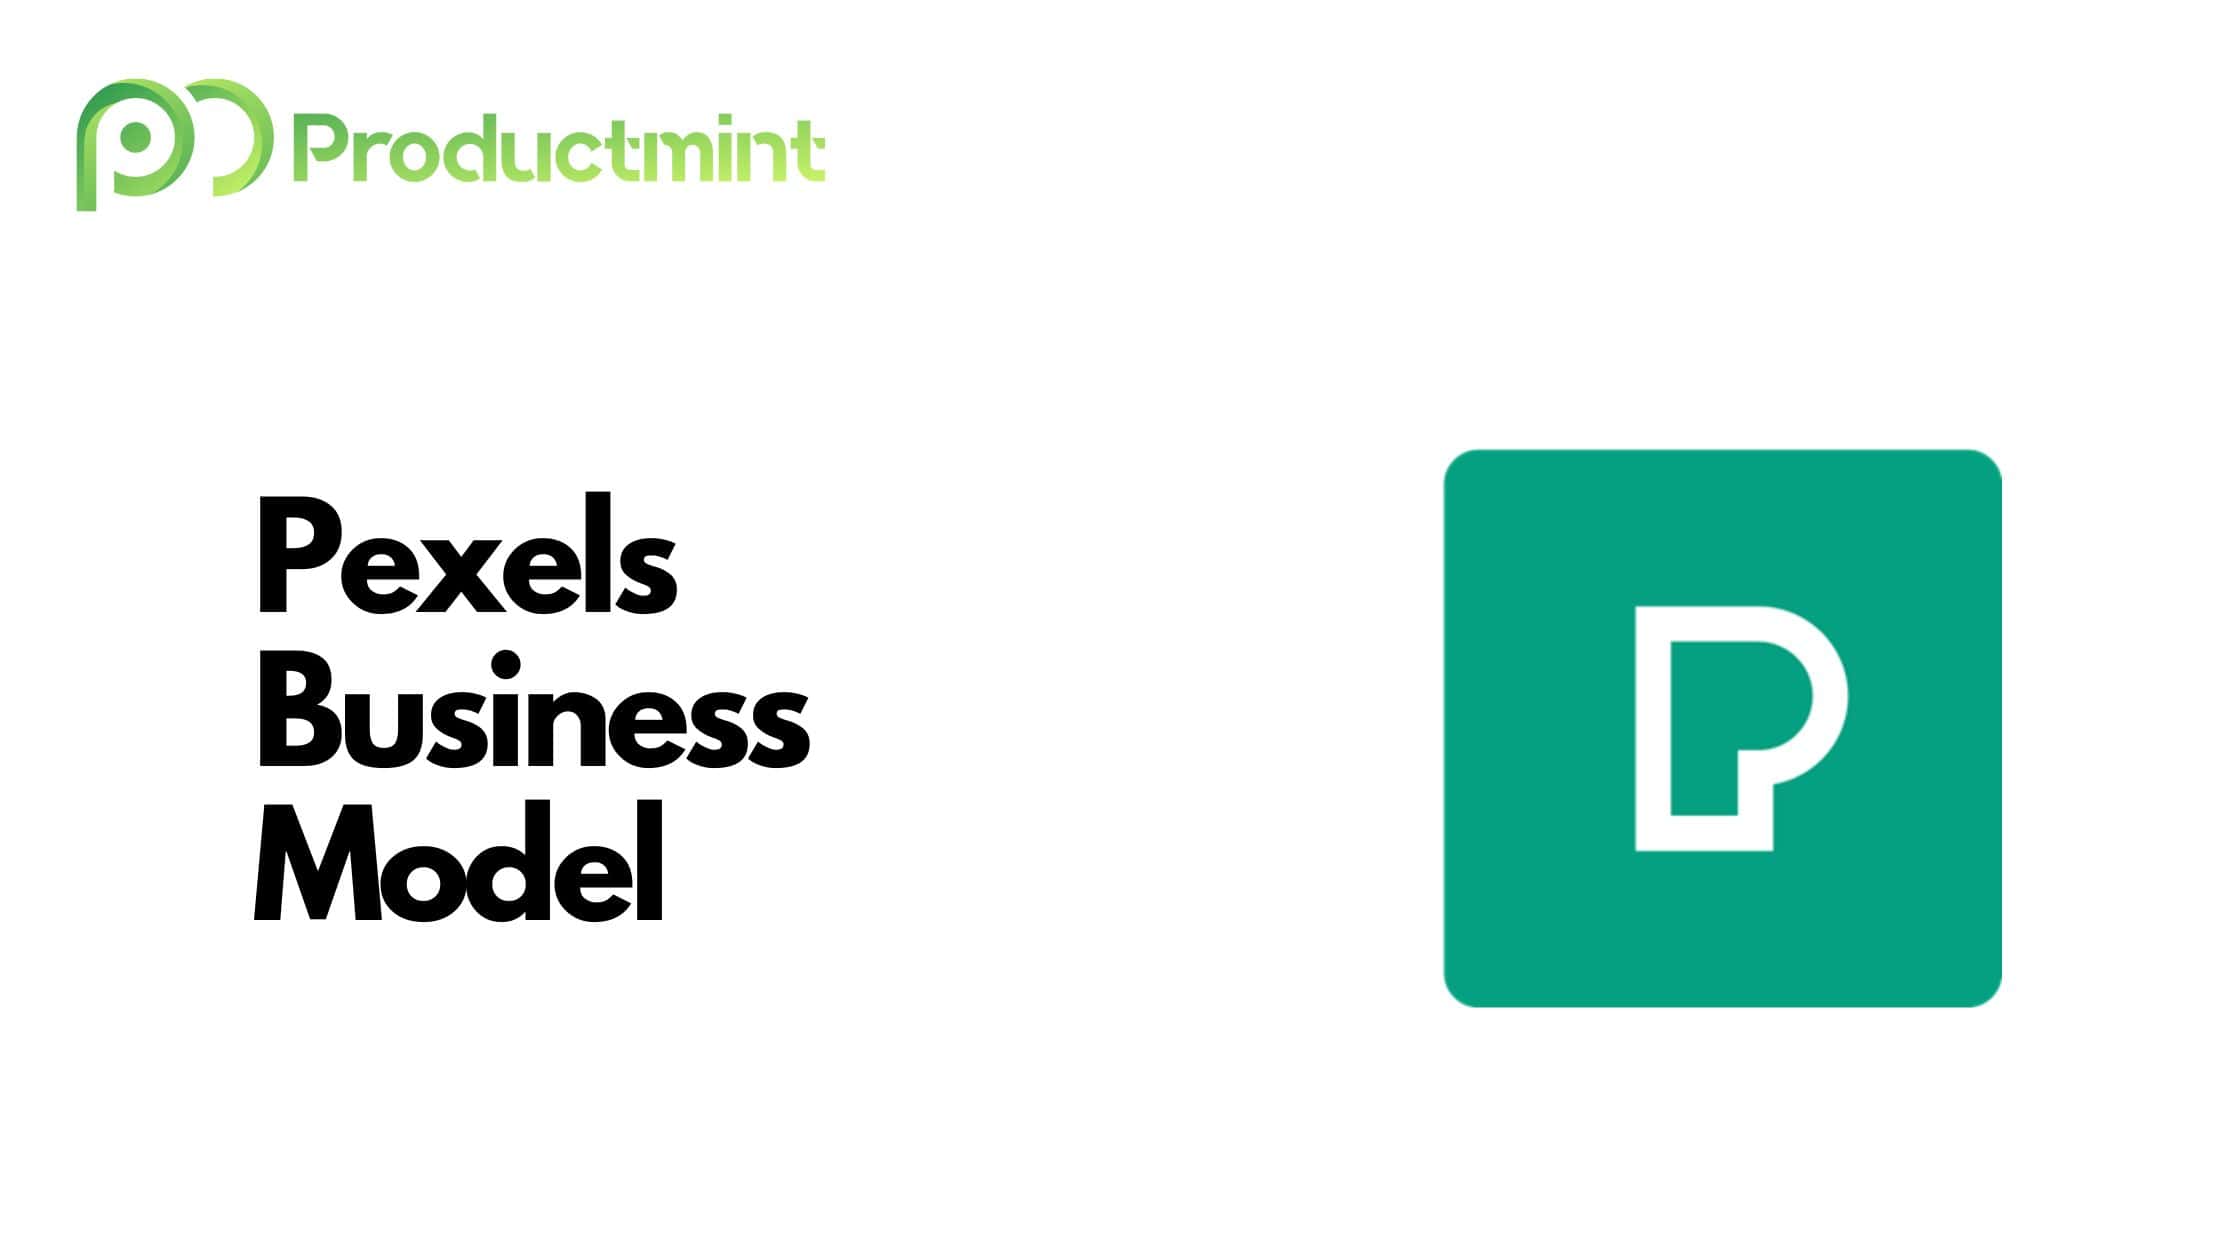 Pexels Business Moddel